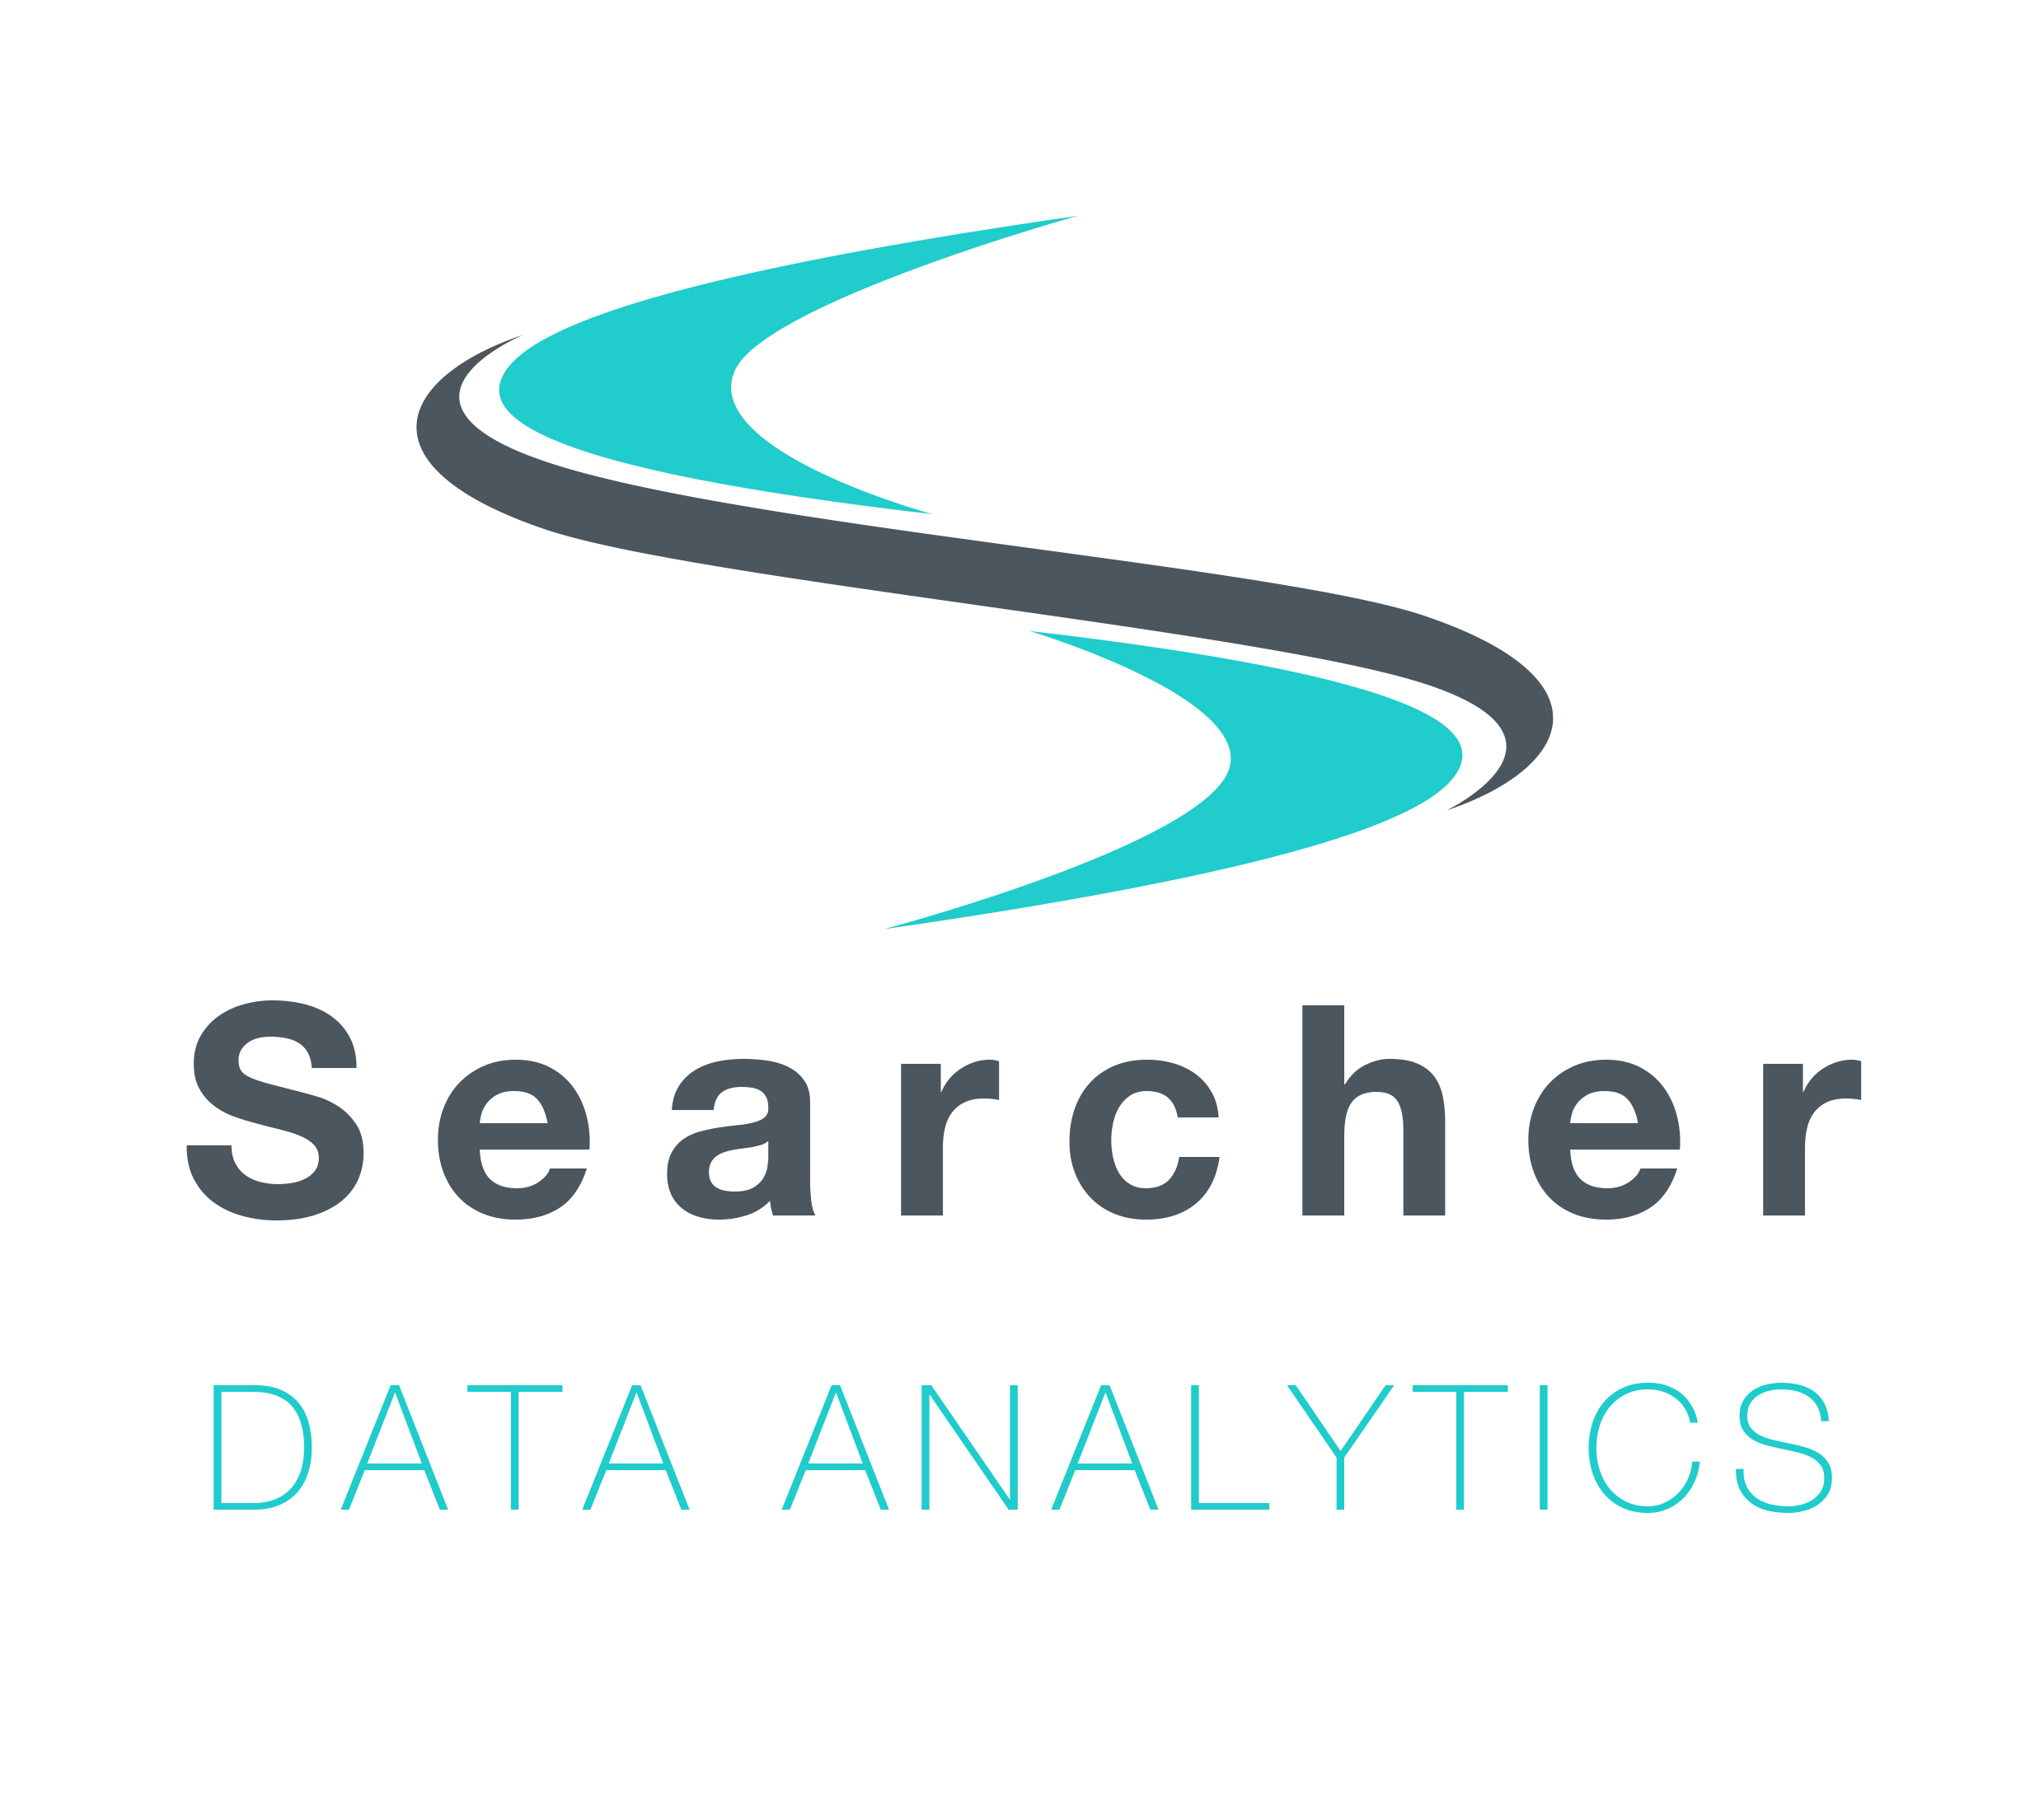 SDA Searcher Data Analytics LTD